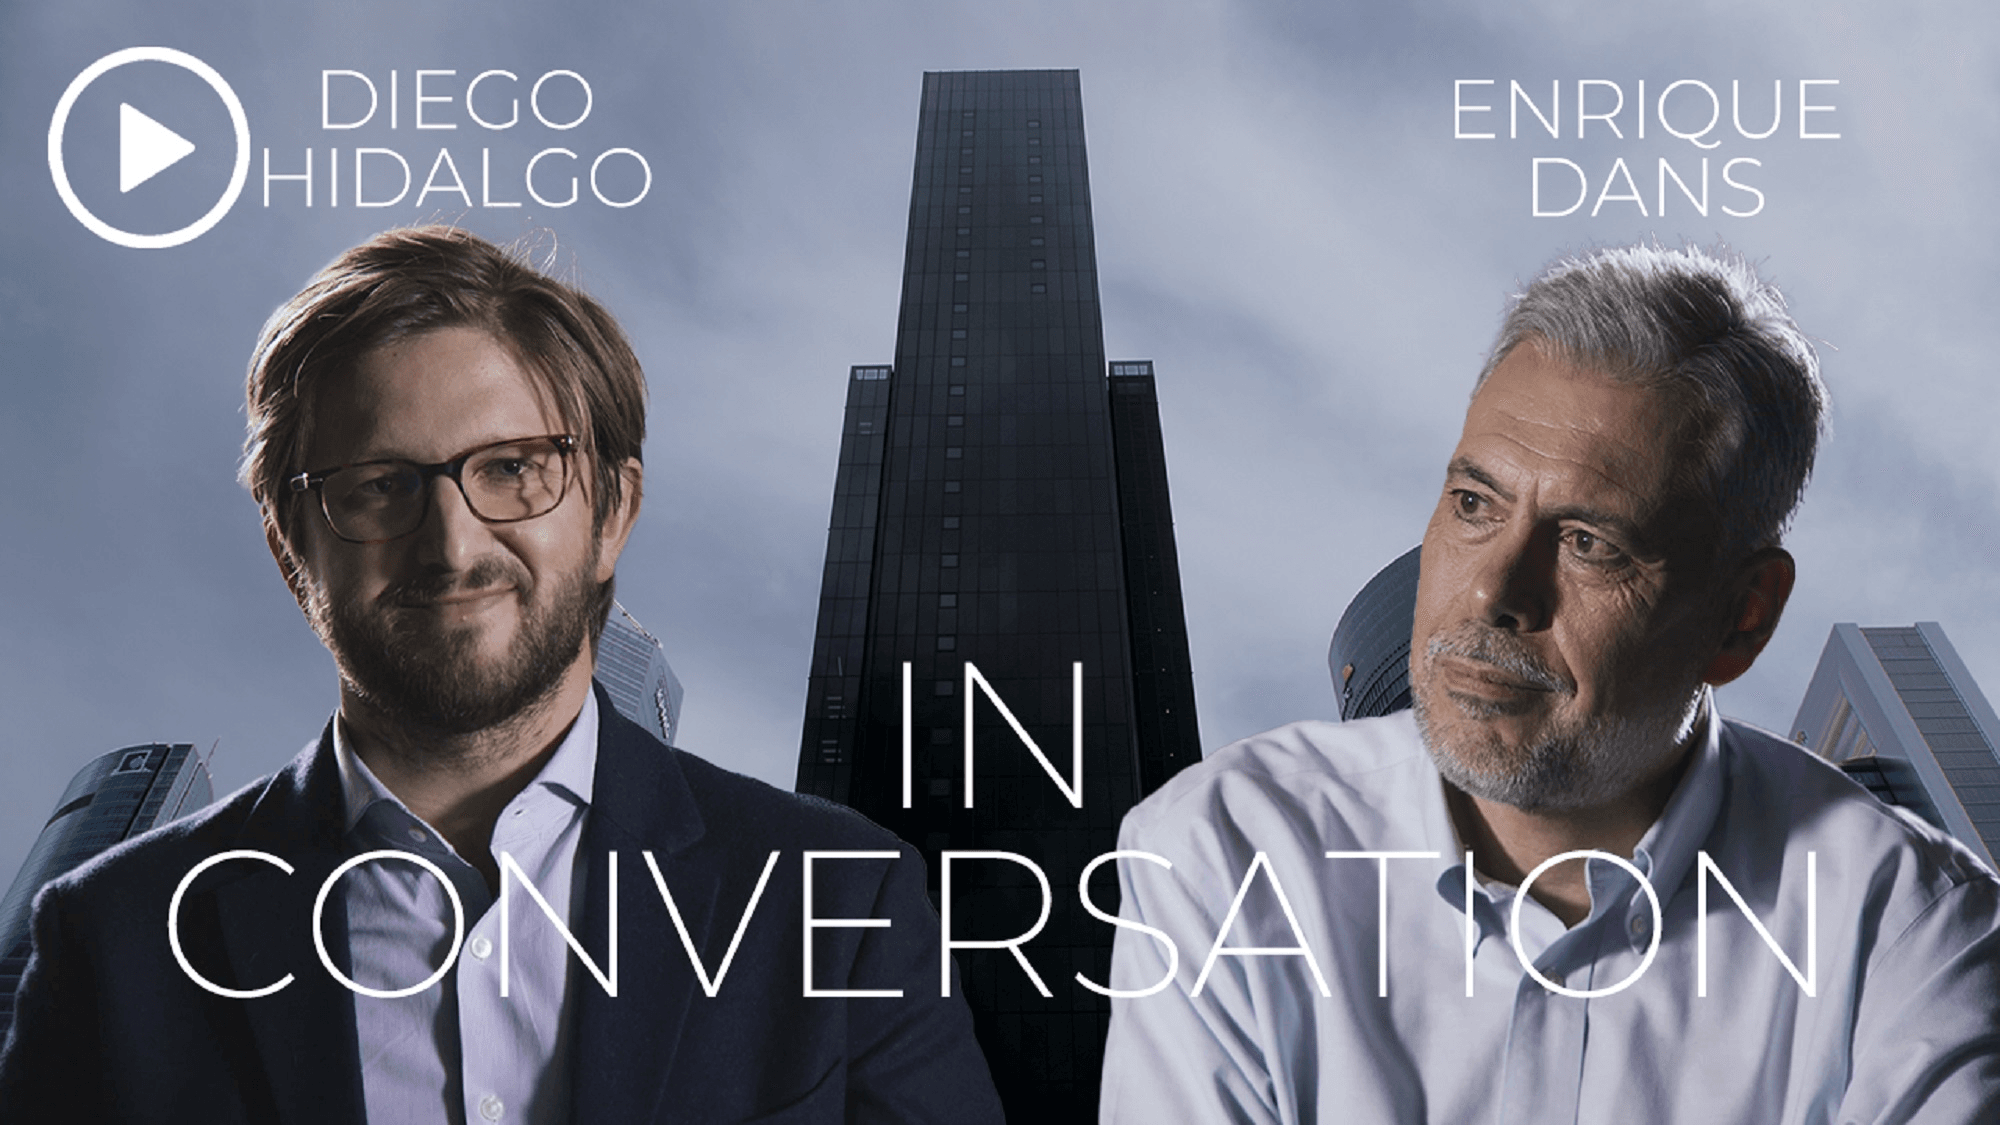 Image In Conversation with Enrique Dans and Diego Hidalgo